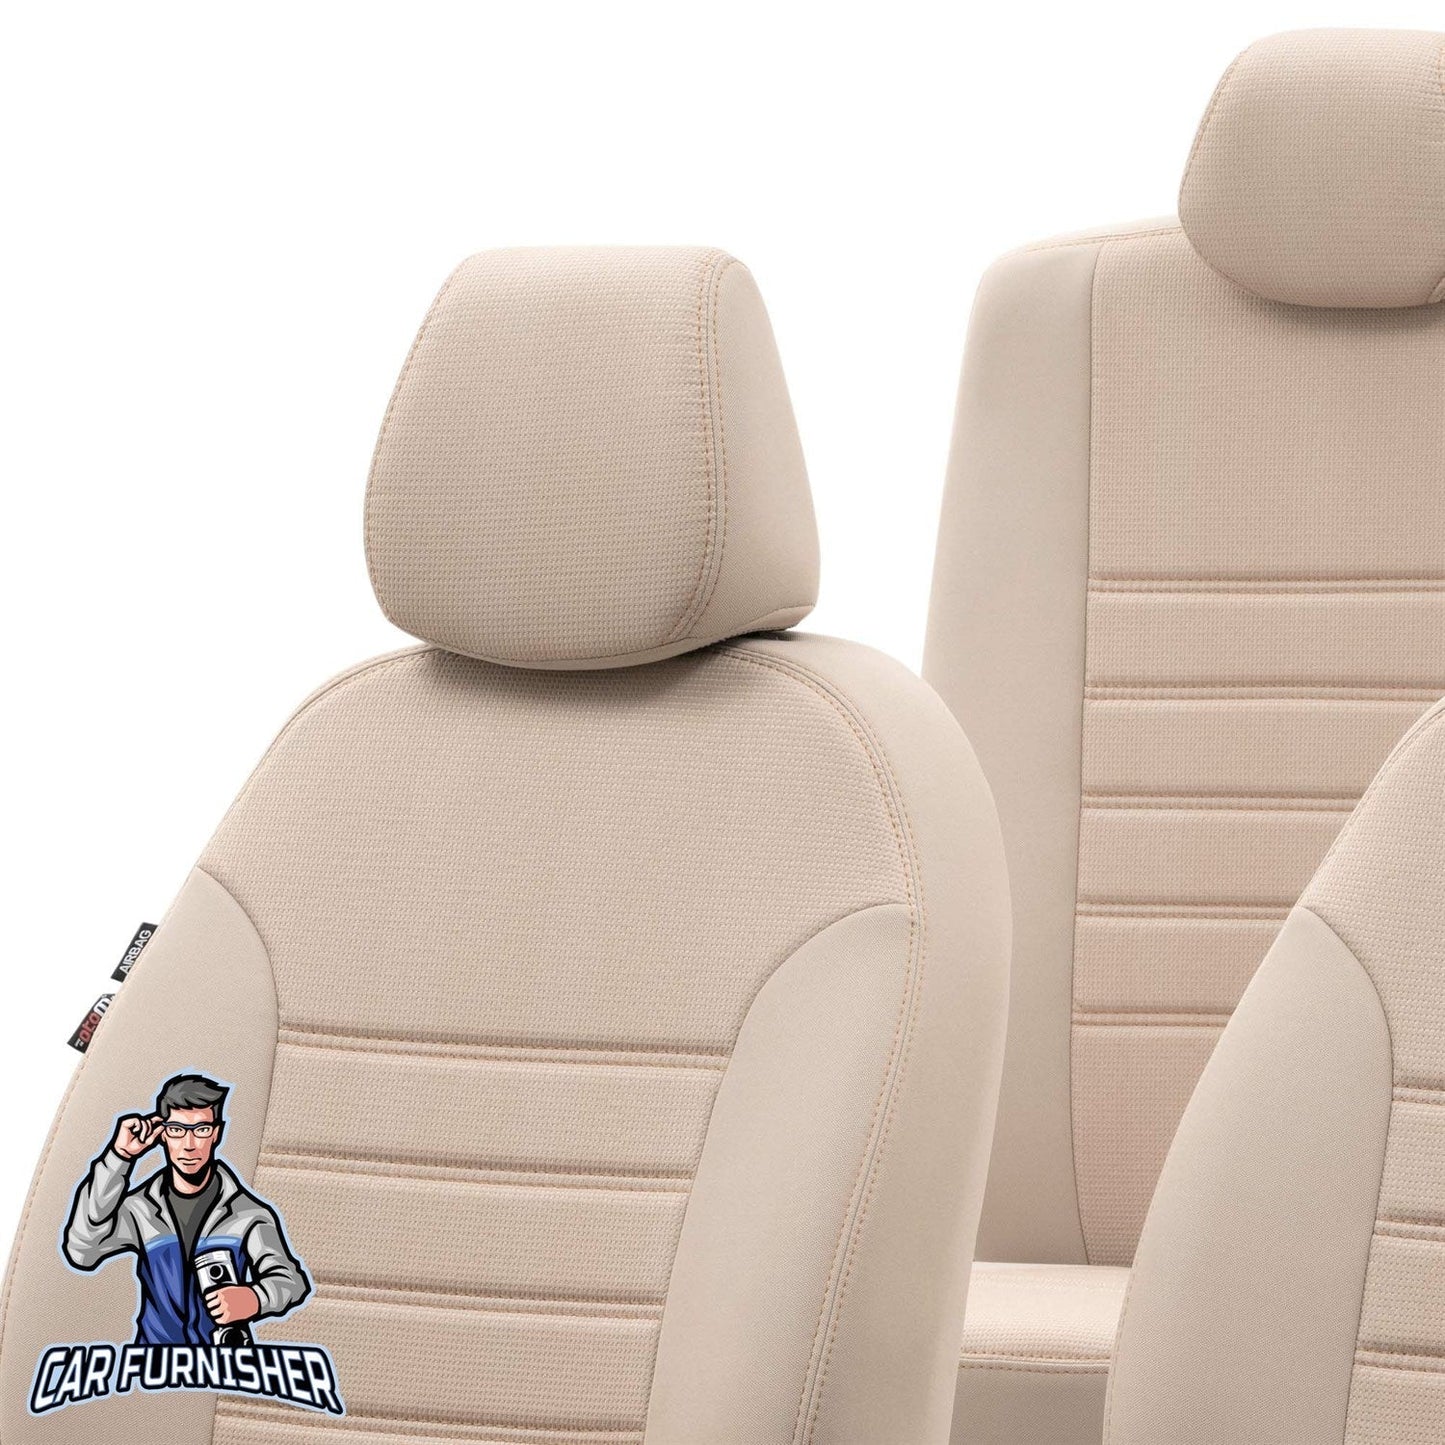 Fiat Marea Seat Covers Original Jacquard Design Beige Jacquard Fabric